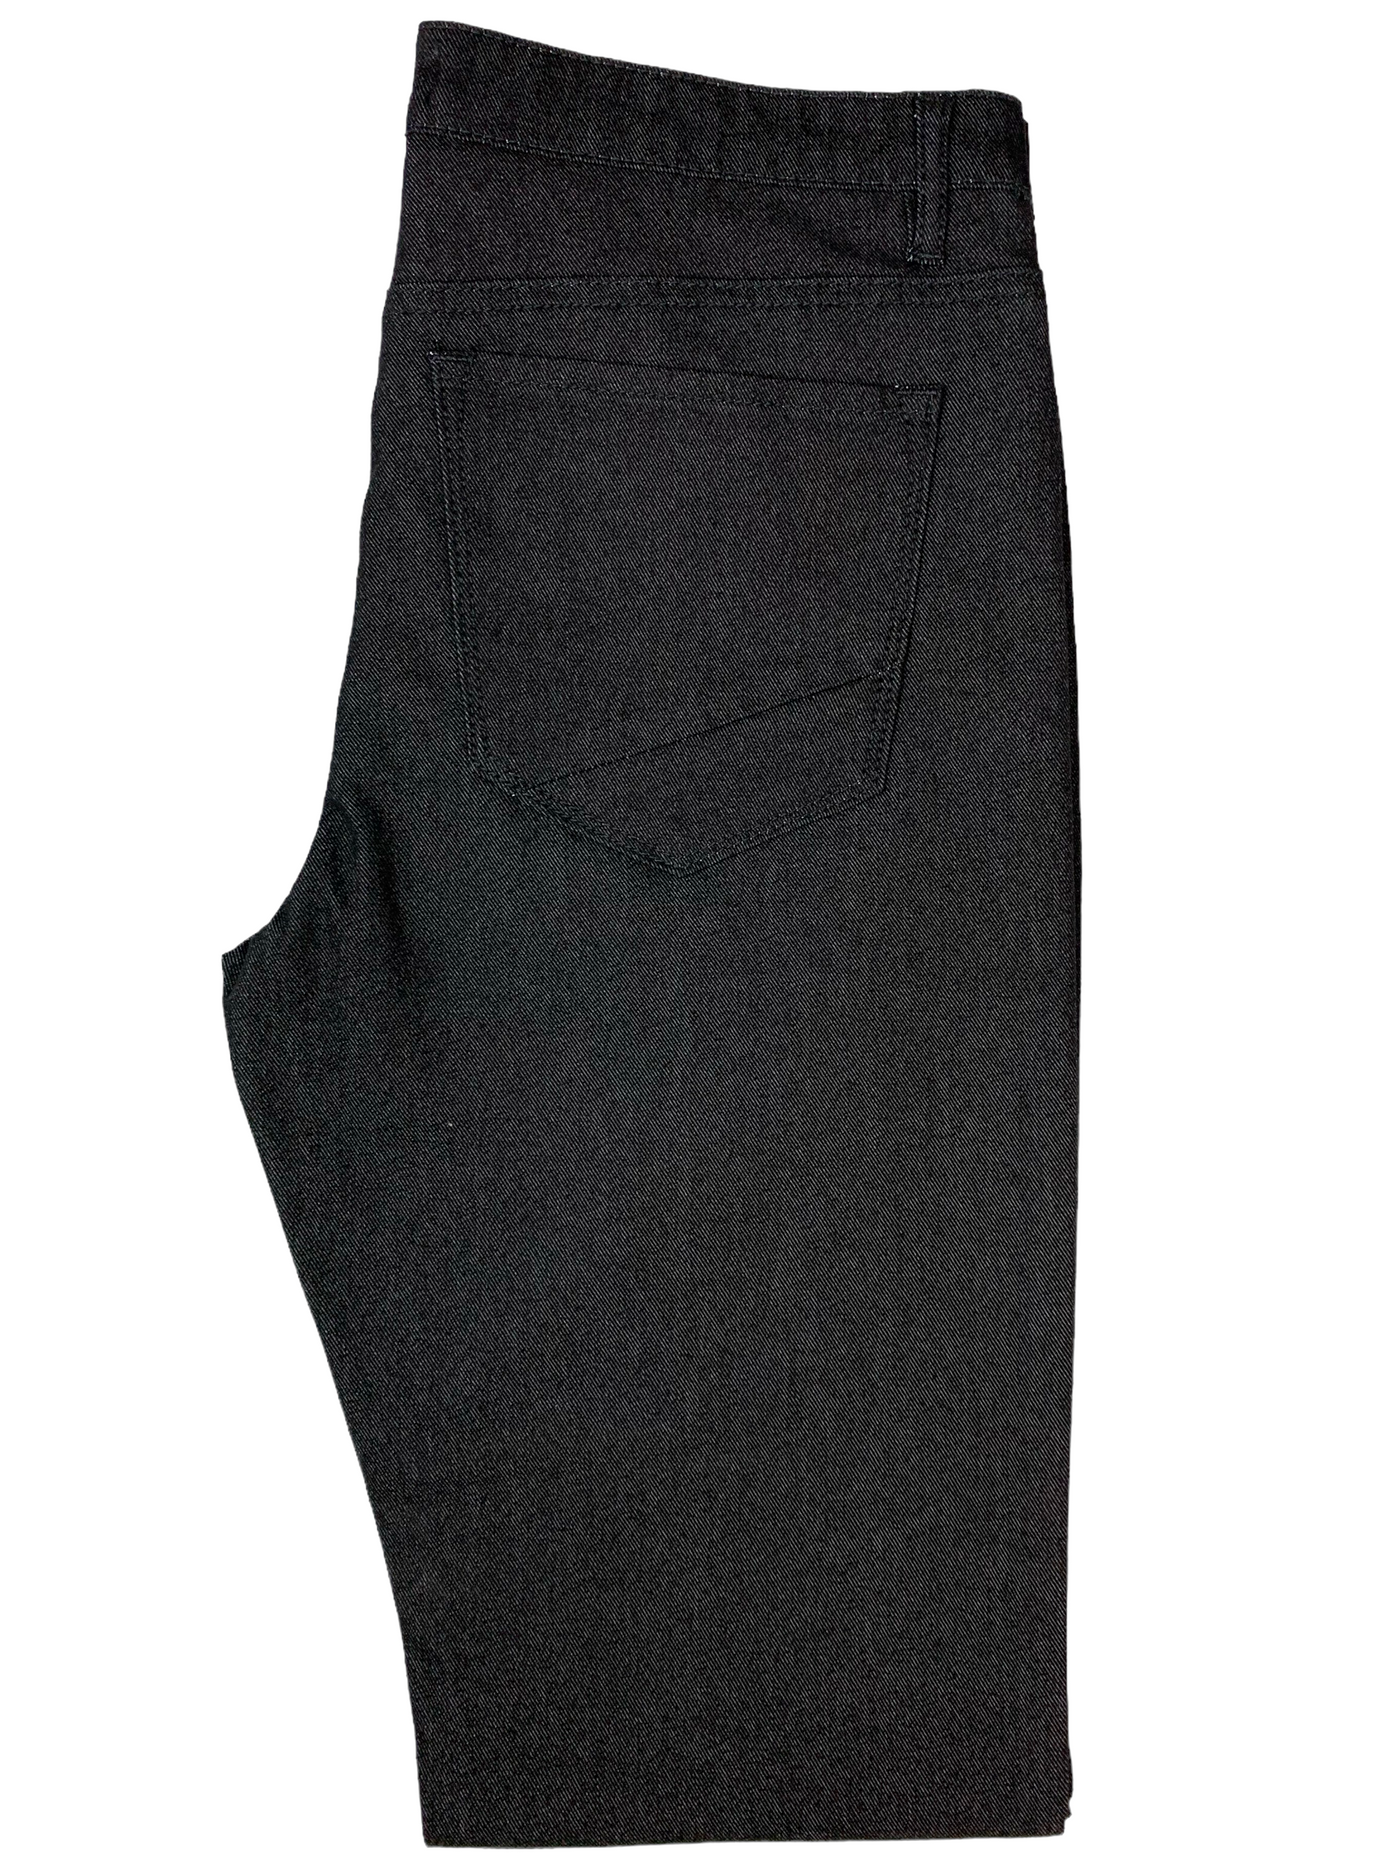 Pantalon de coton extensible noir